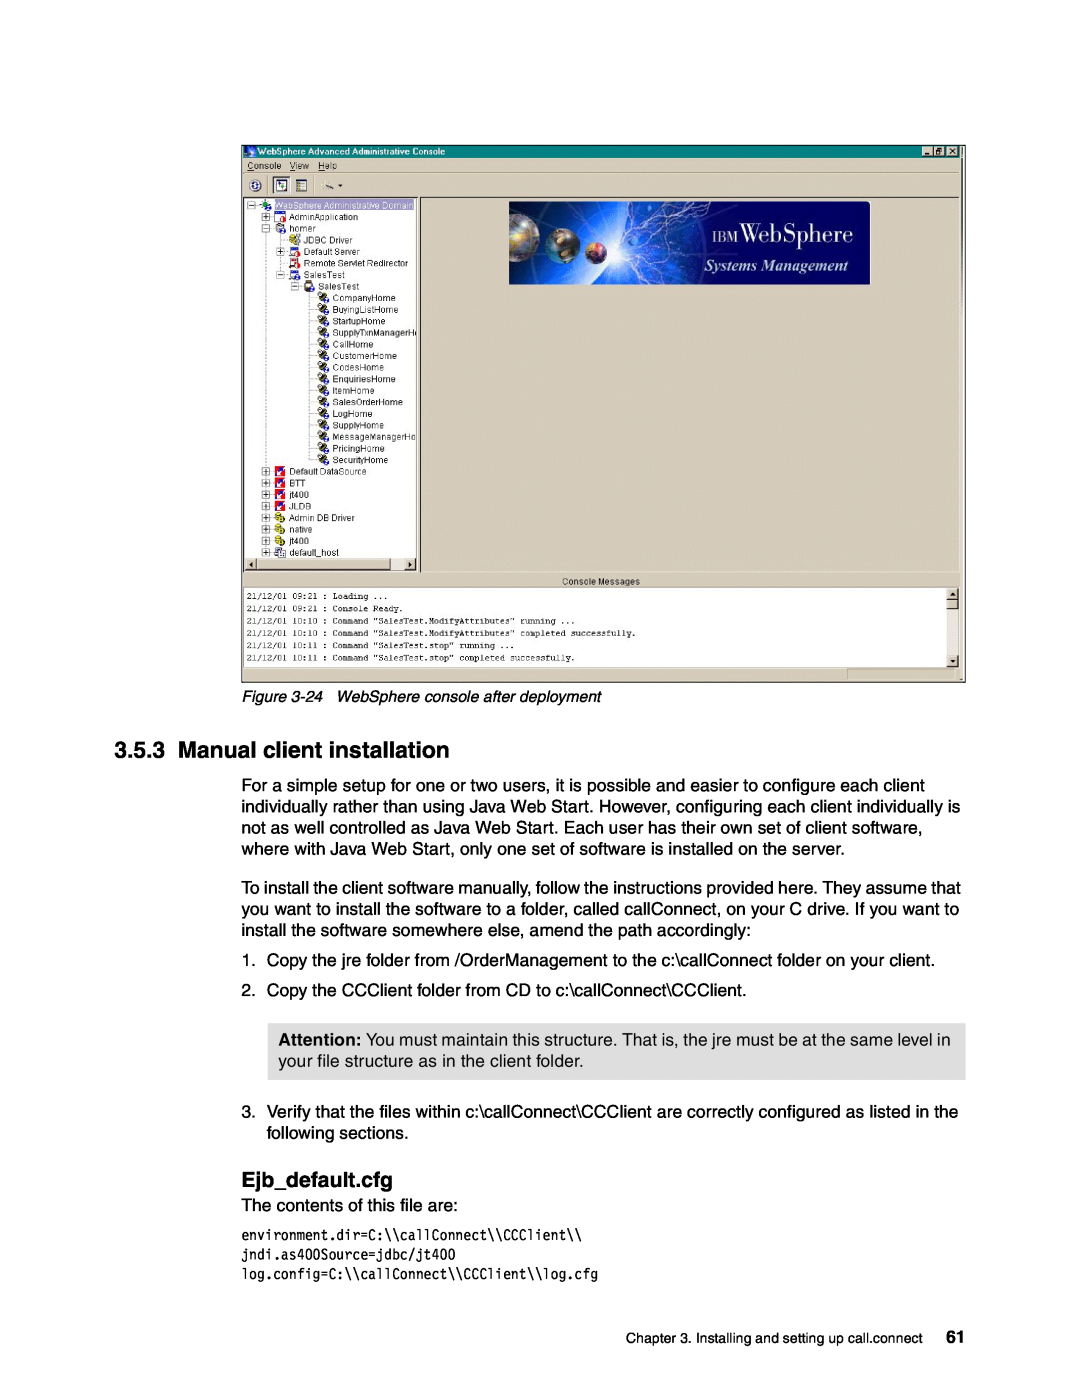 IBM SG24-6526-00 manual Manual client installation, Ejbdefault.cfg 